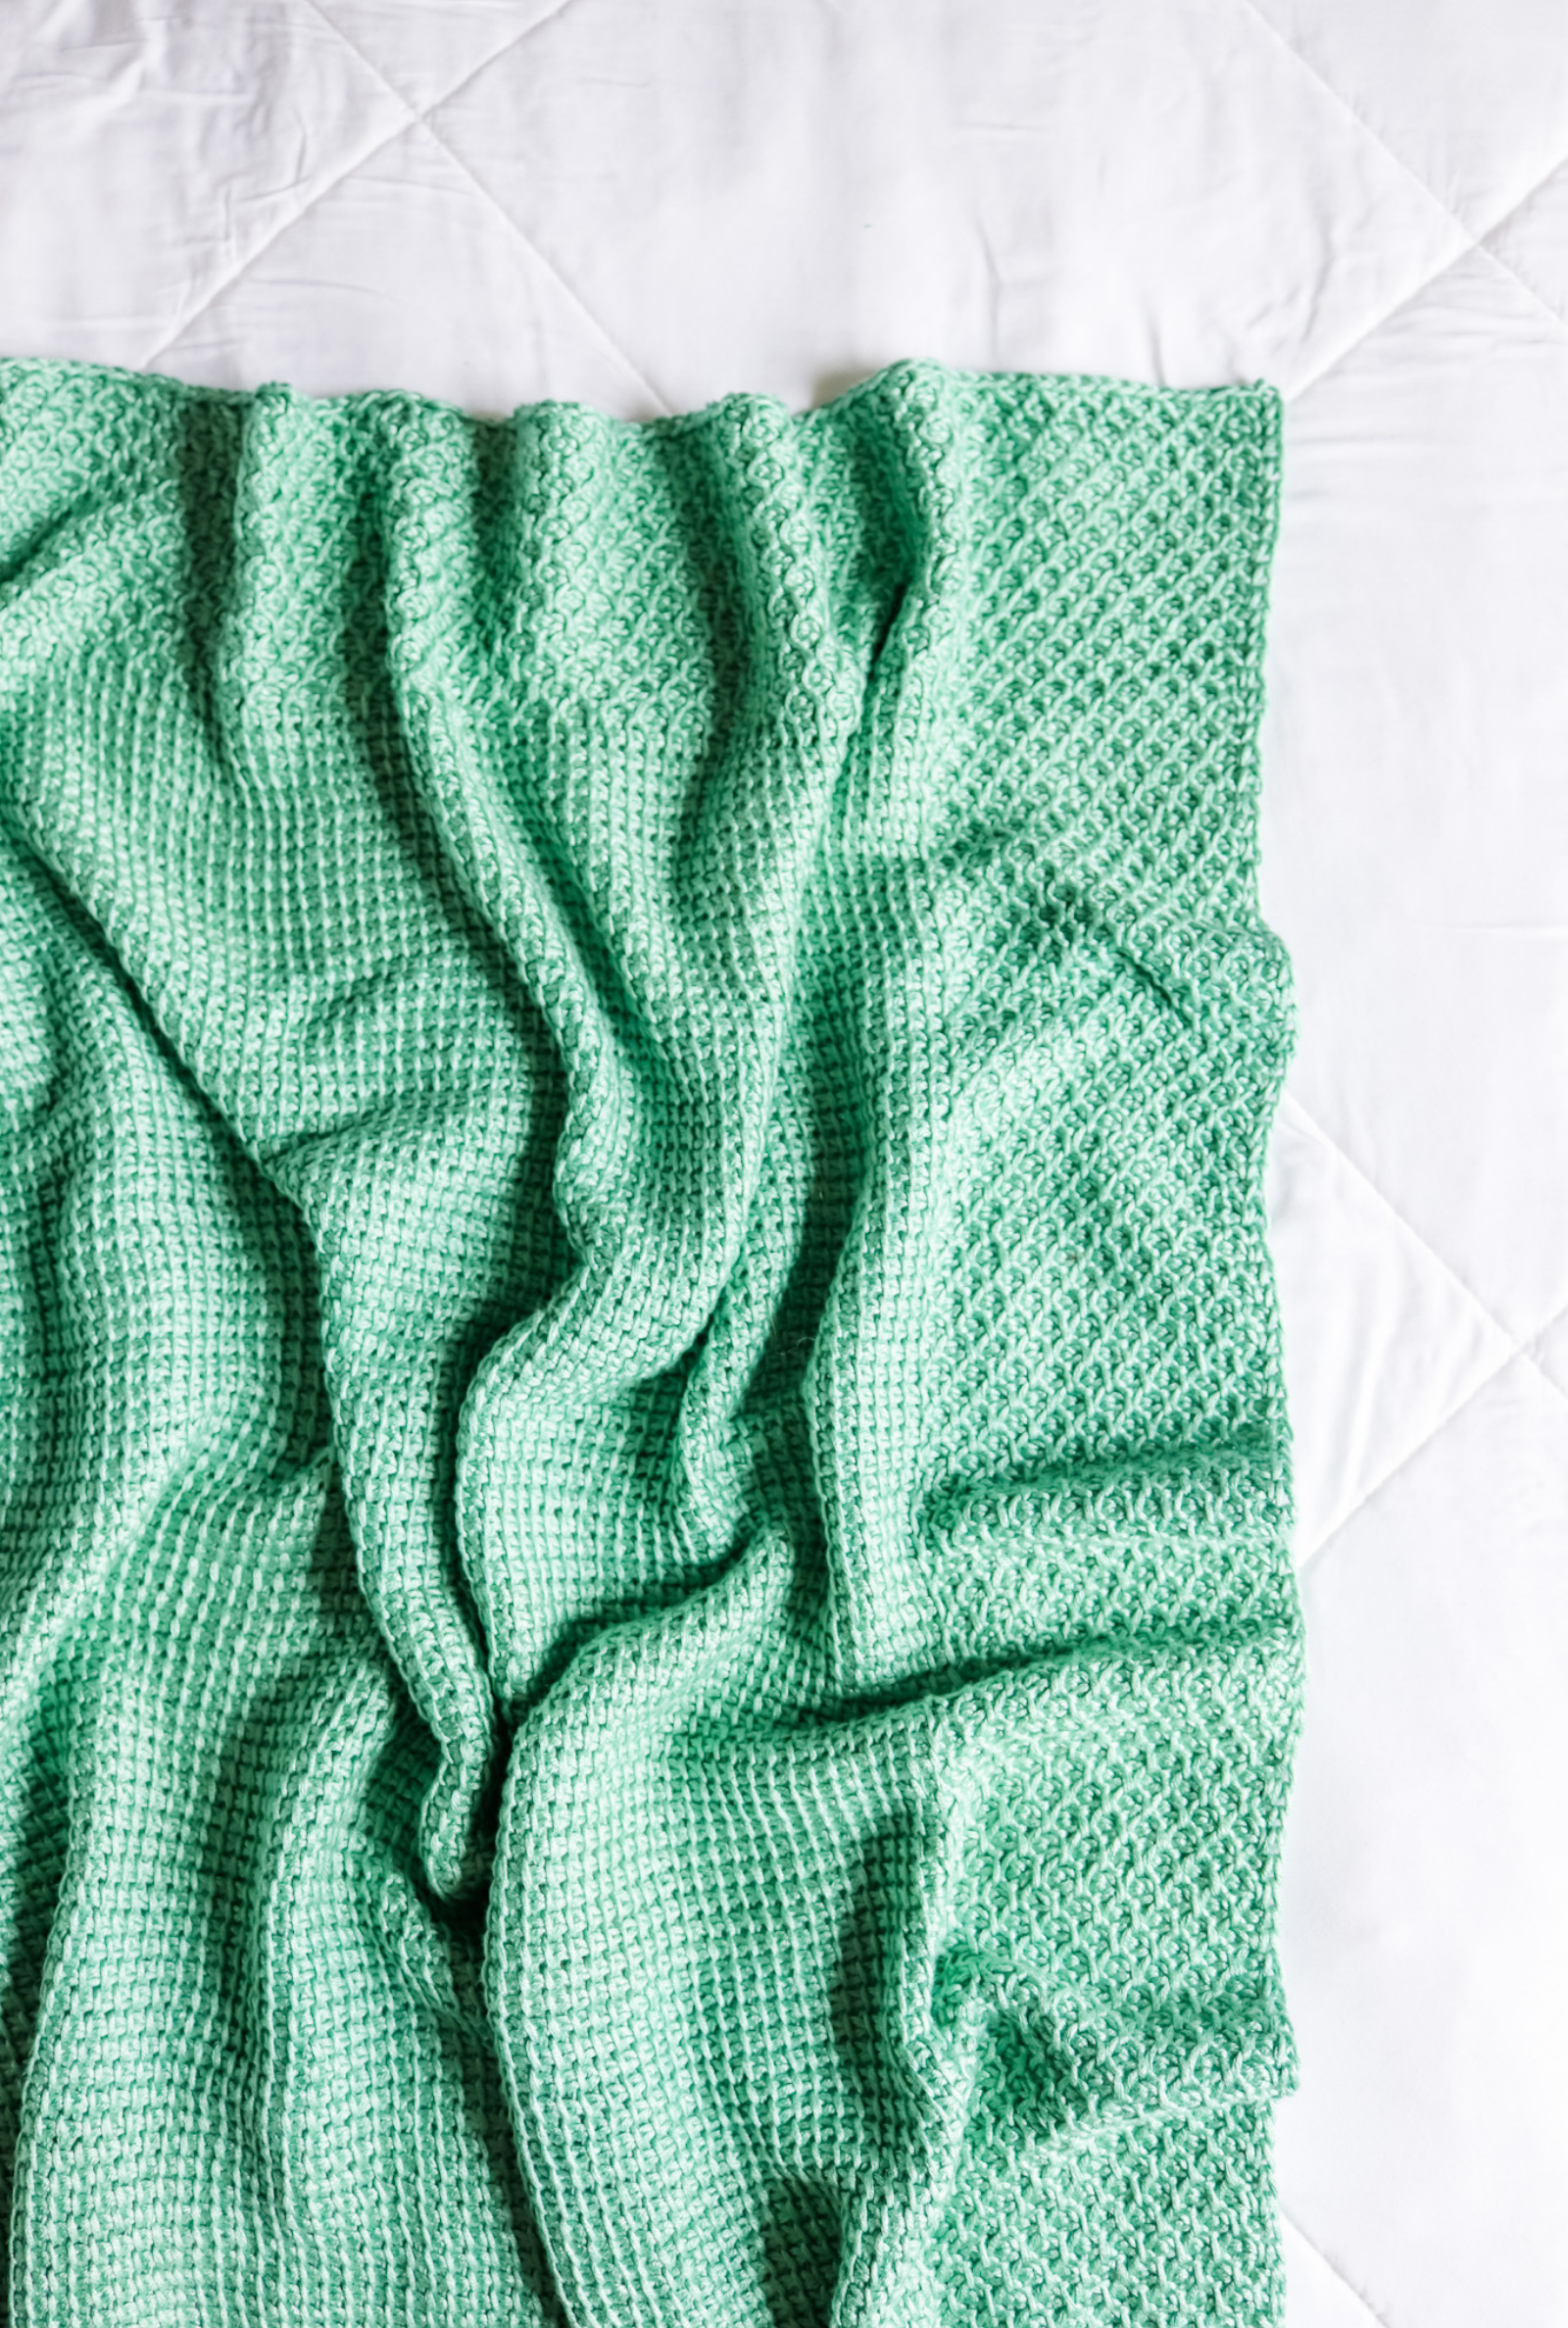 Elmore Blanket // Crochet PDF Pattern